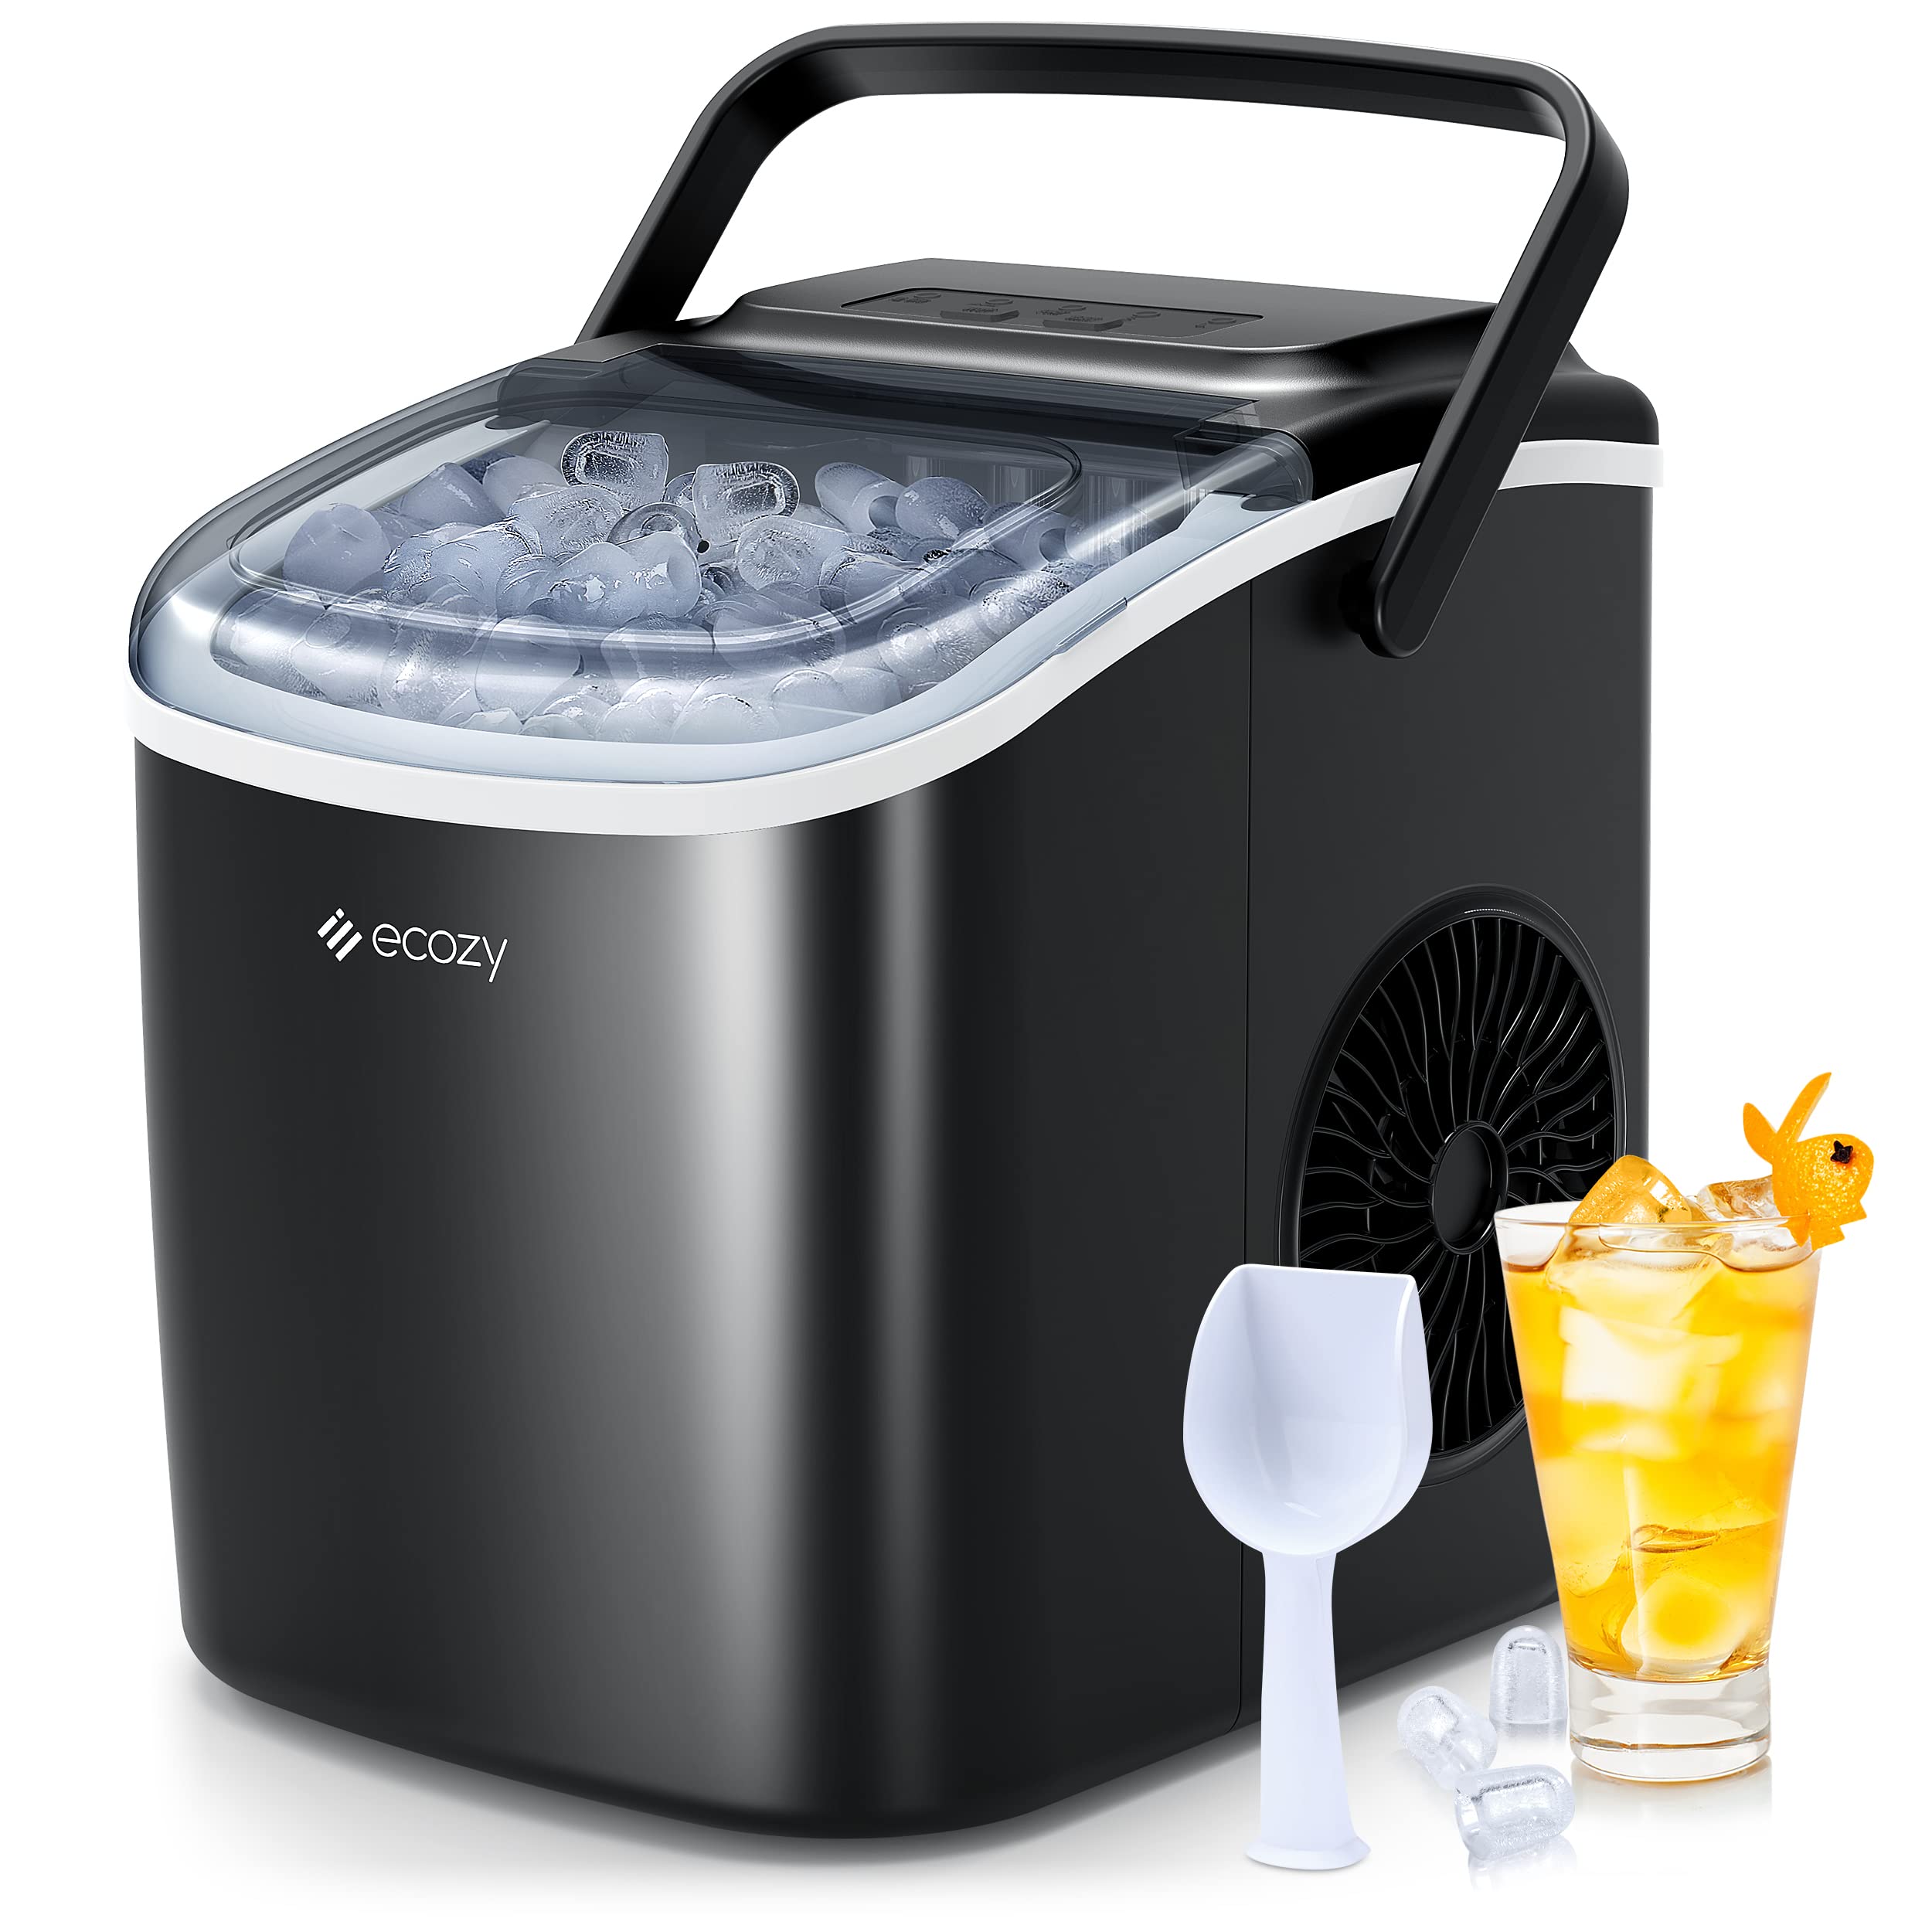 ecozy 便携式台面制冰机 - 6 分钟内制冰 9 块，日产量 26 磅，带冰袋、勺子和篮子自动清洁，适用于...